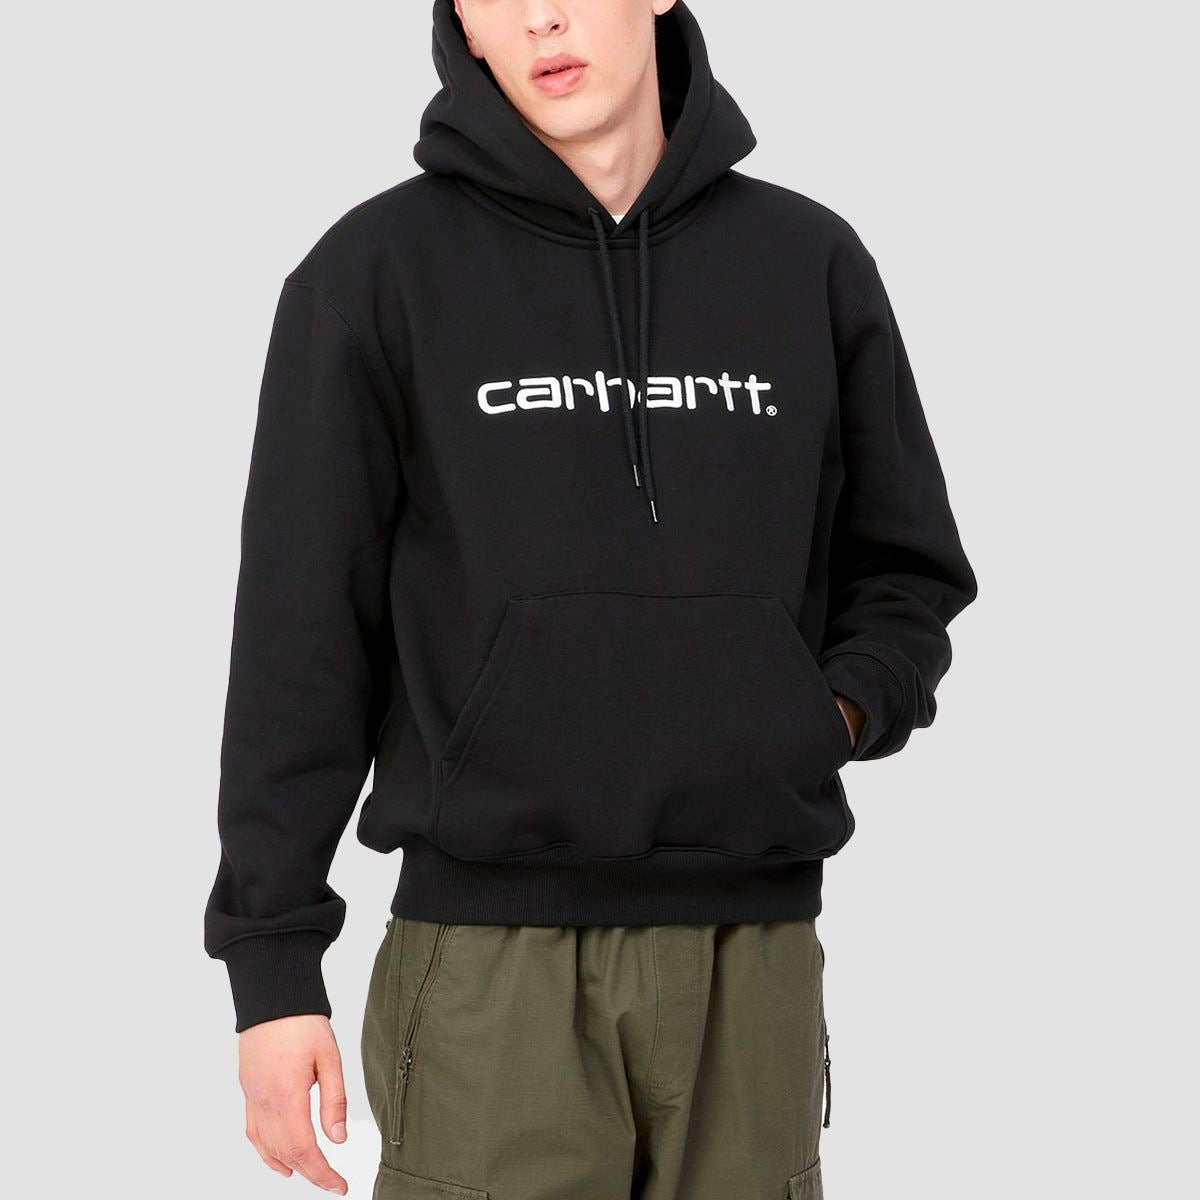 Carhartt WIP Carhartt Pullover Hoodie Black/White